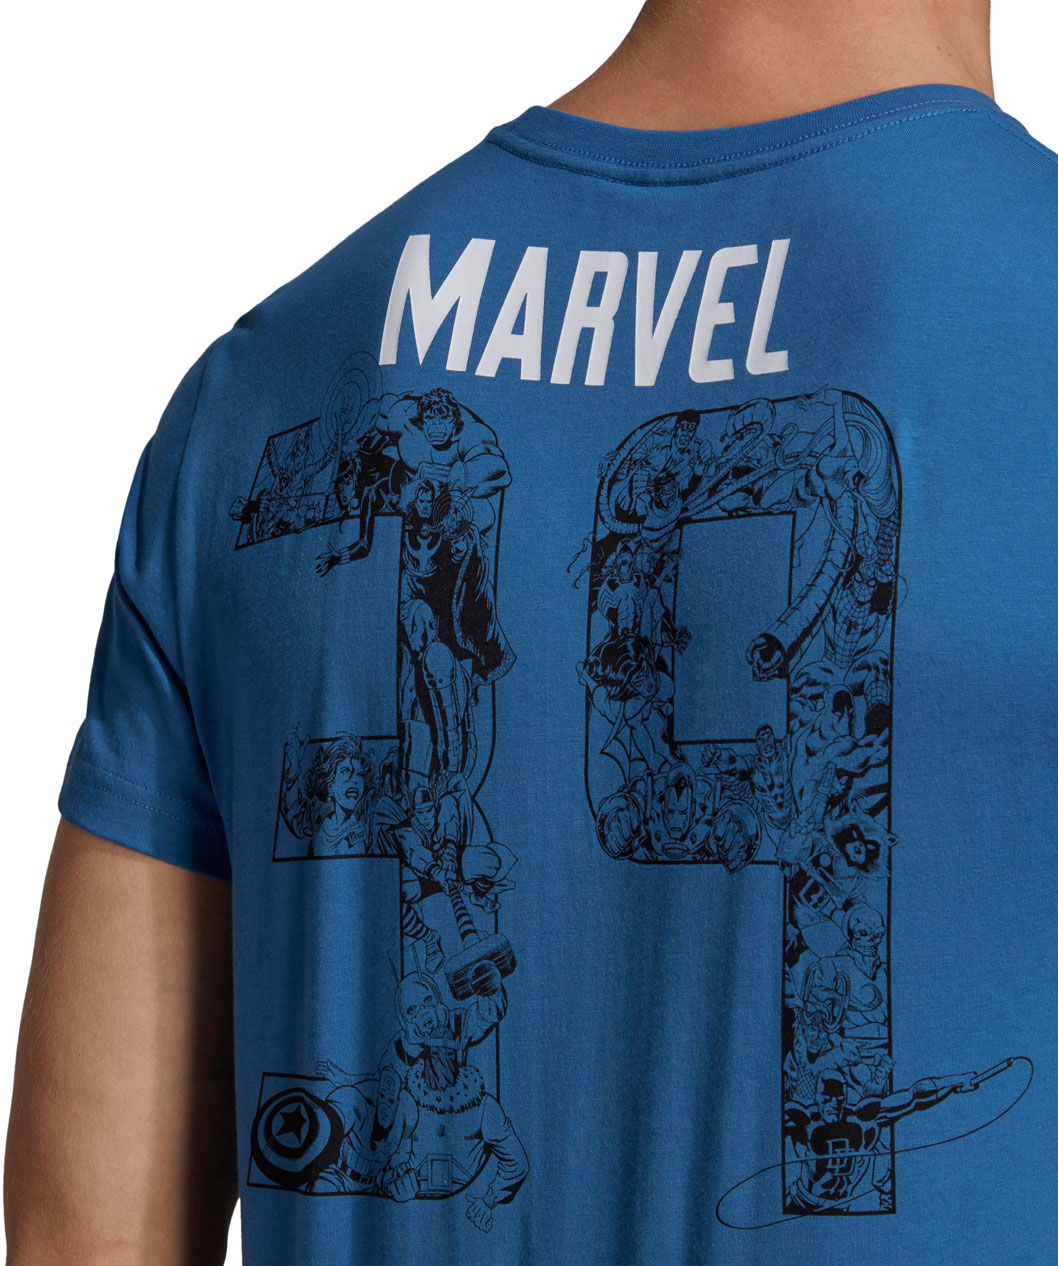 Marvel Team Shirt